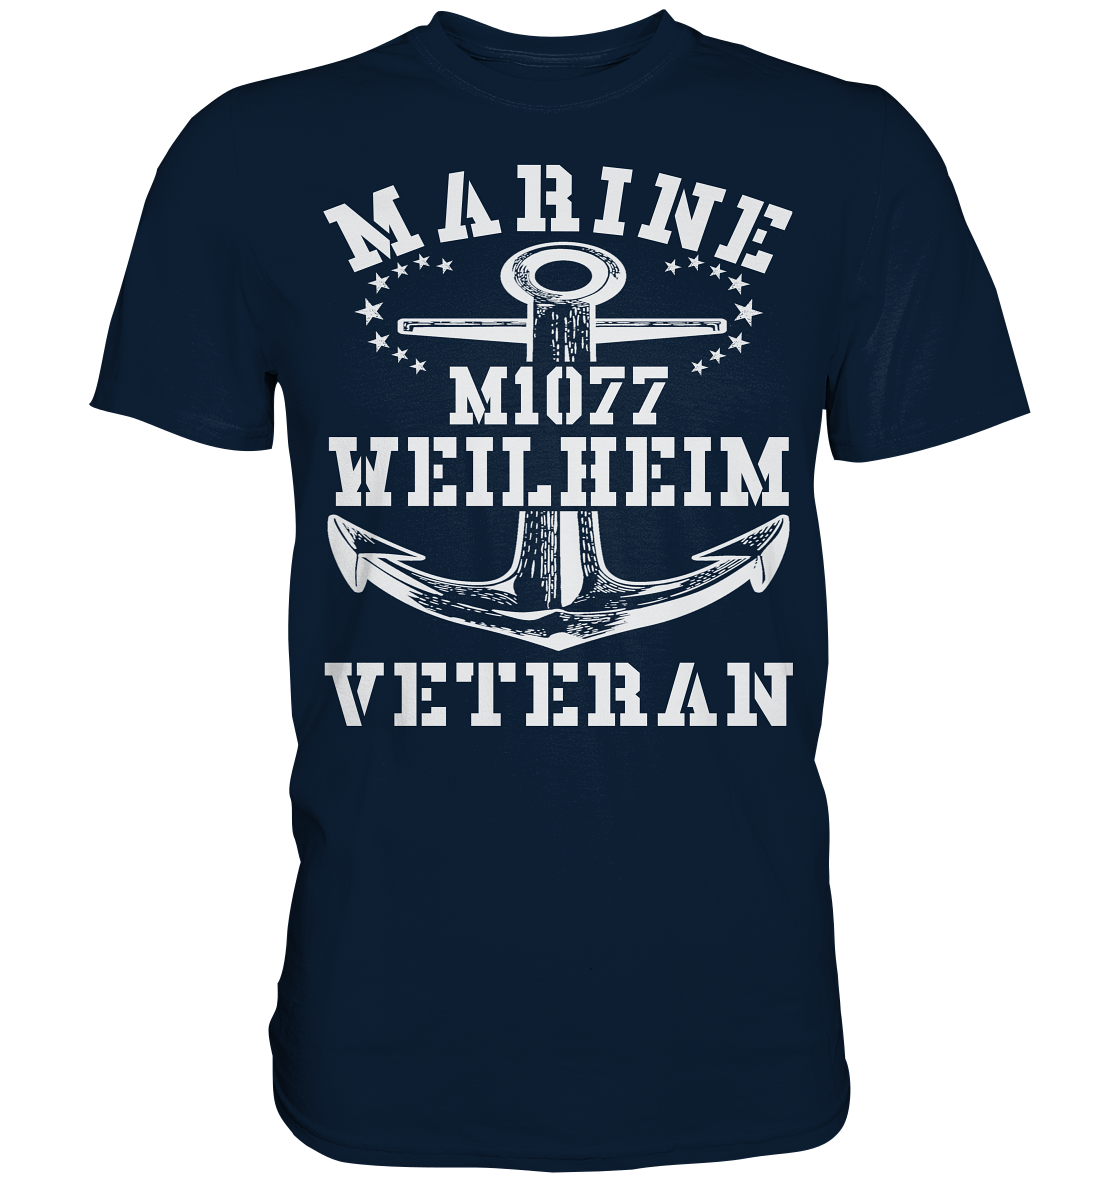 MARINE VETERAN M1077 WEILHEIM - Premium Shirt